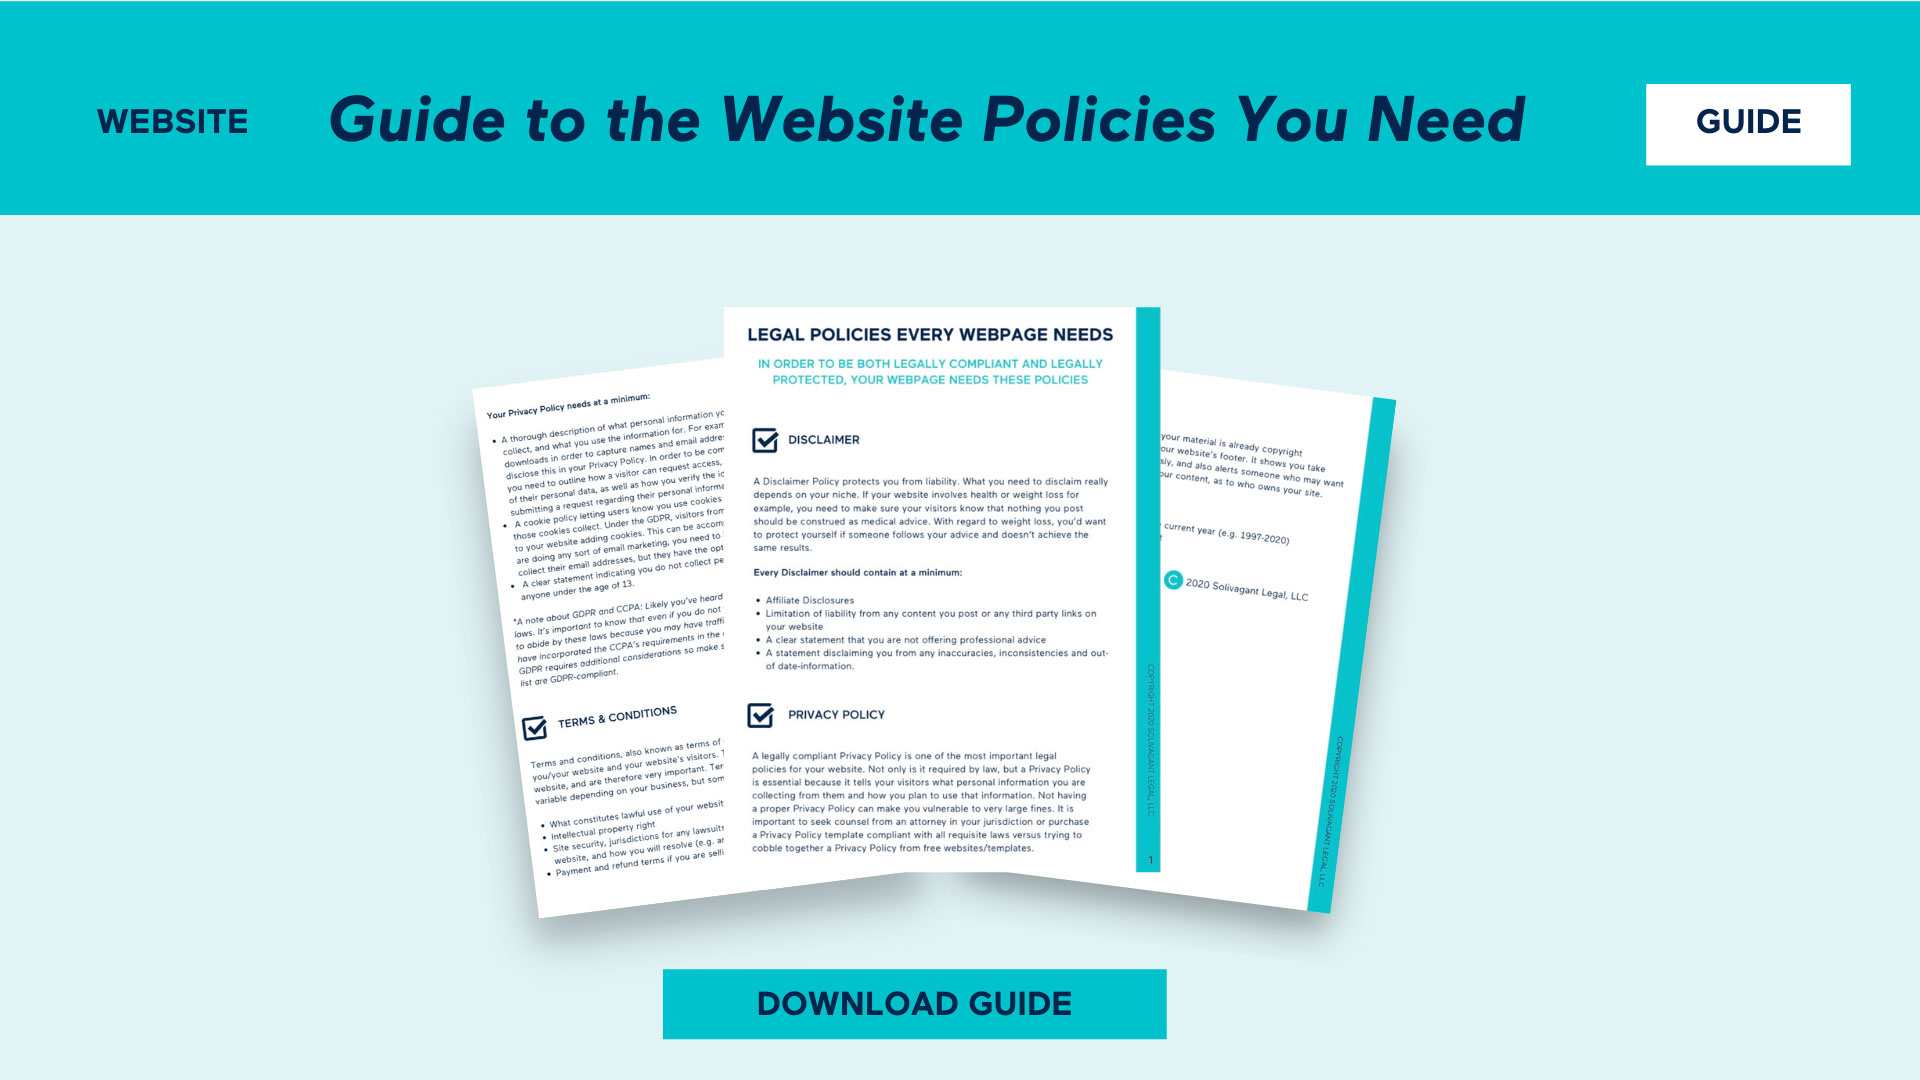 Webpage Policies Every Webpage Needs